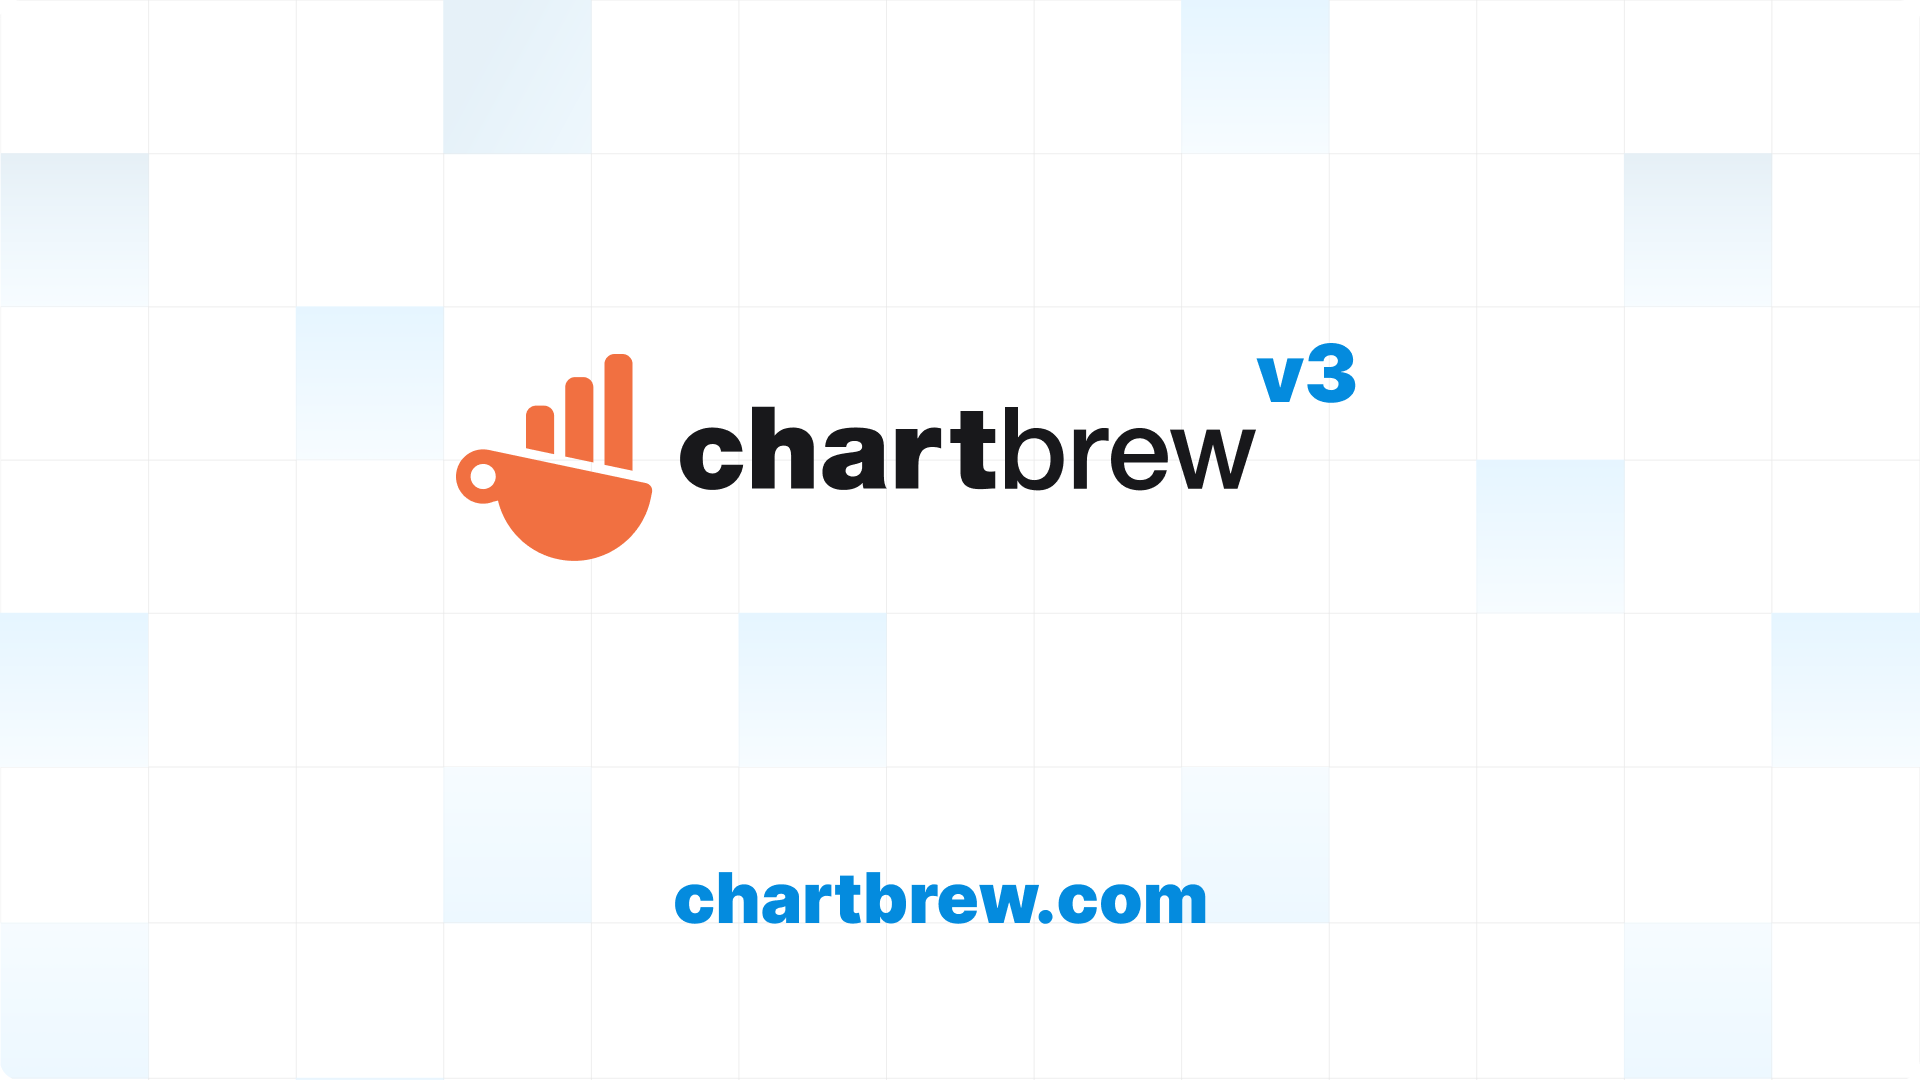 Chartbrew v3 launch